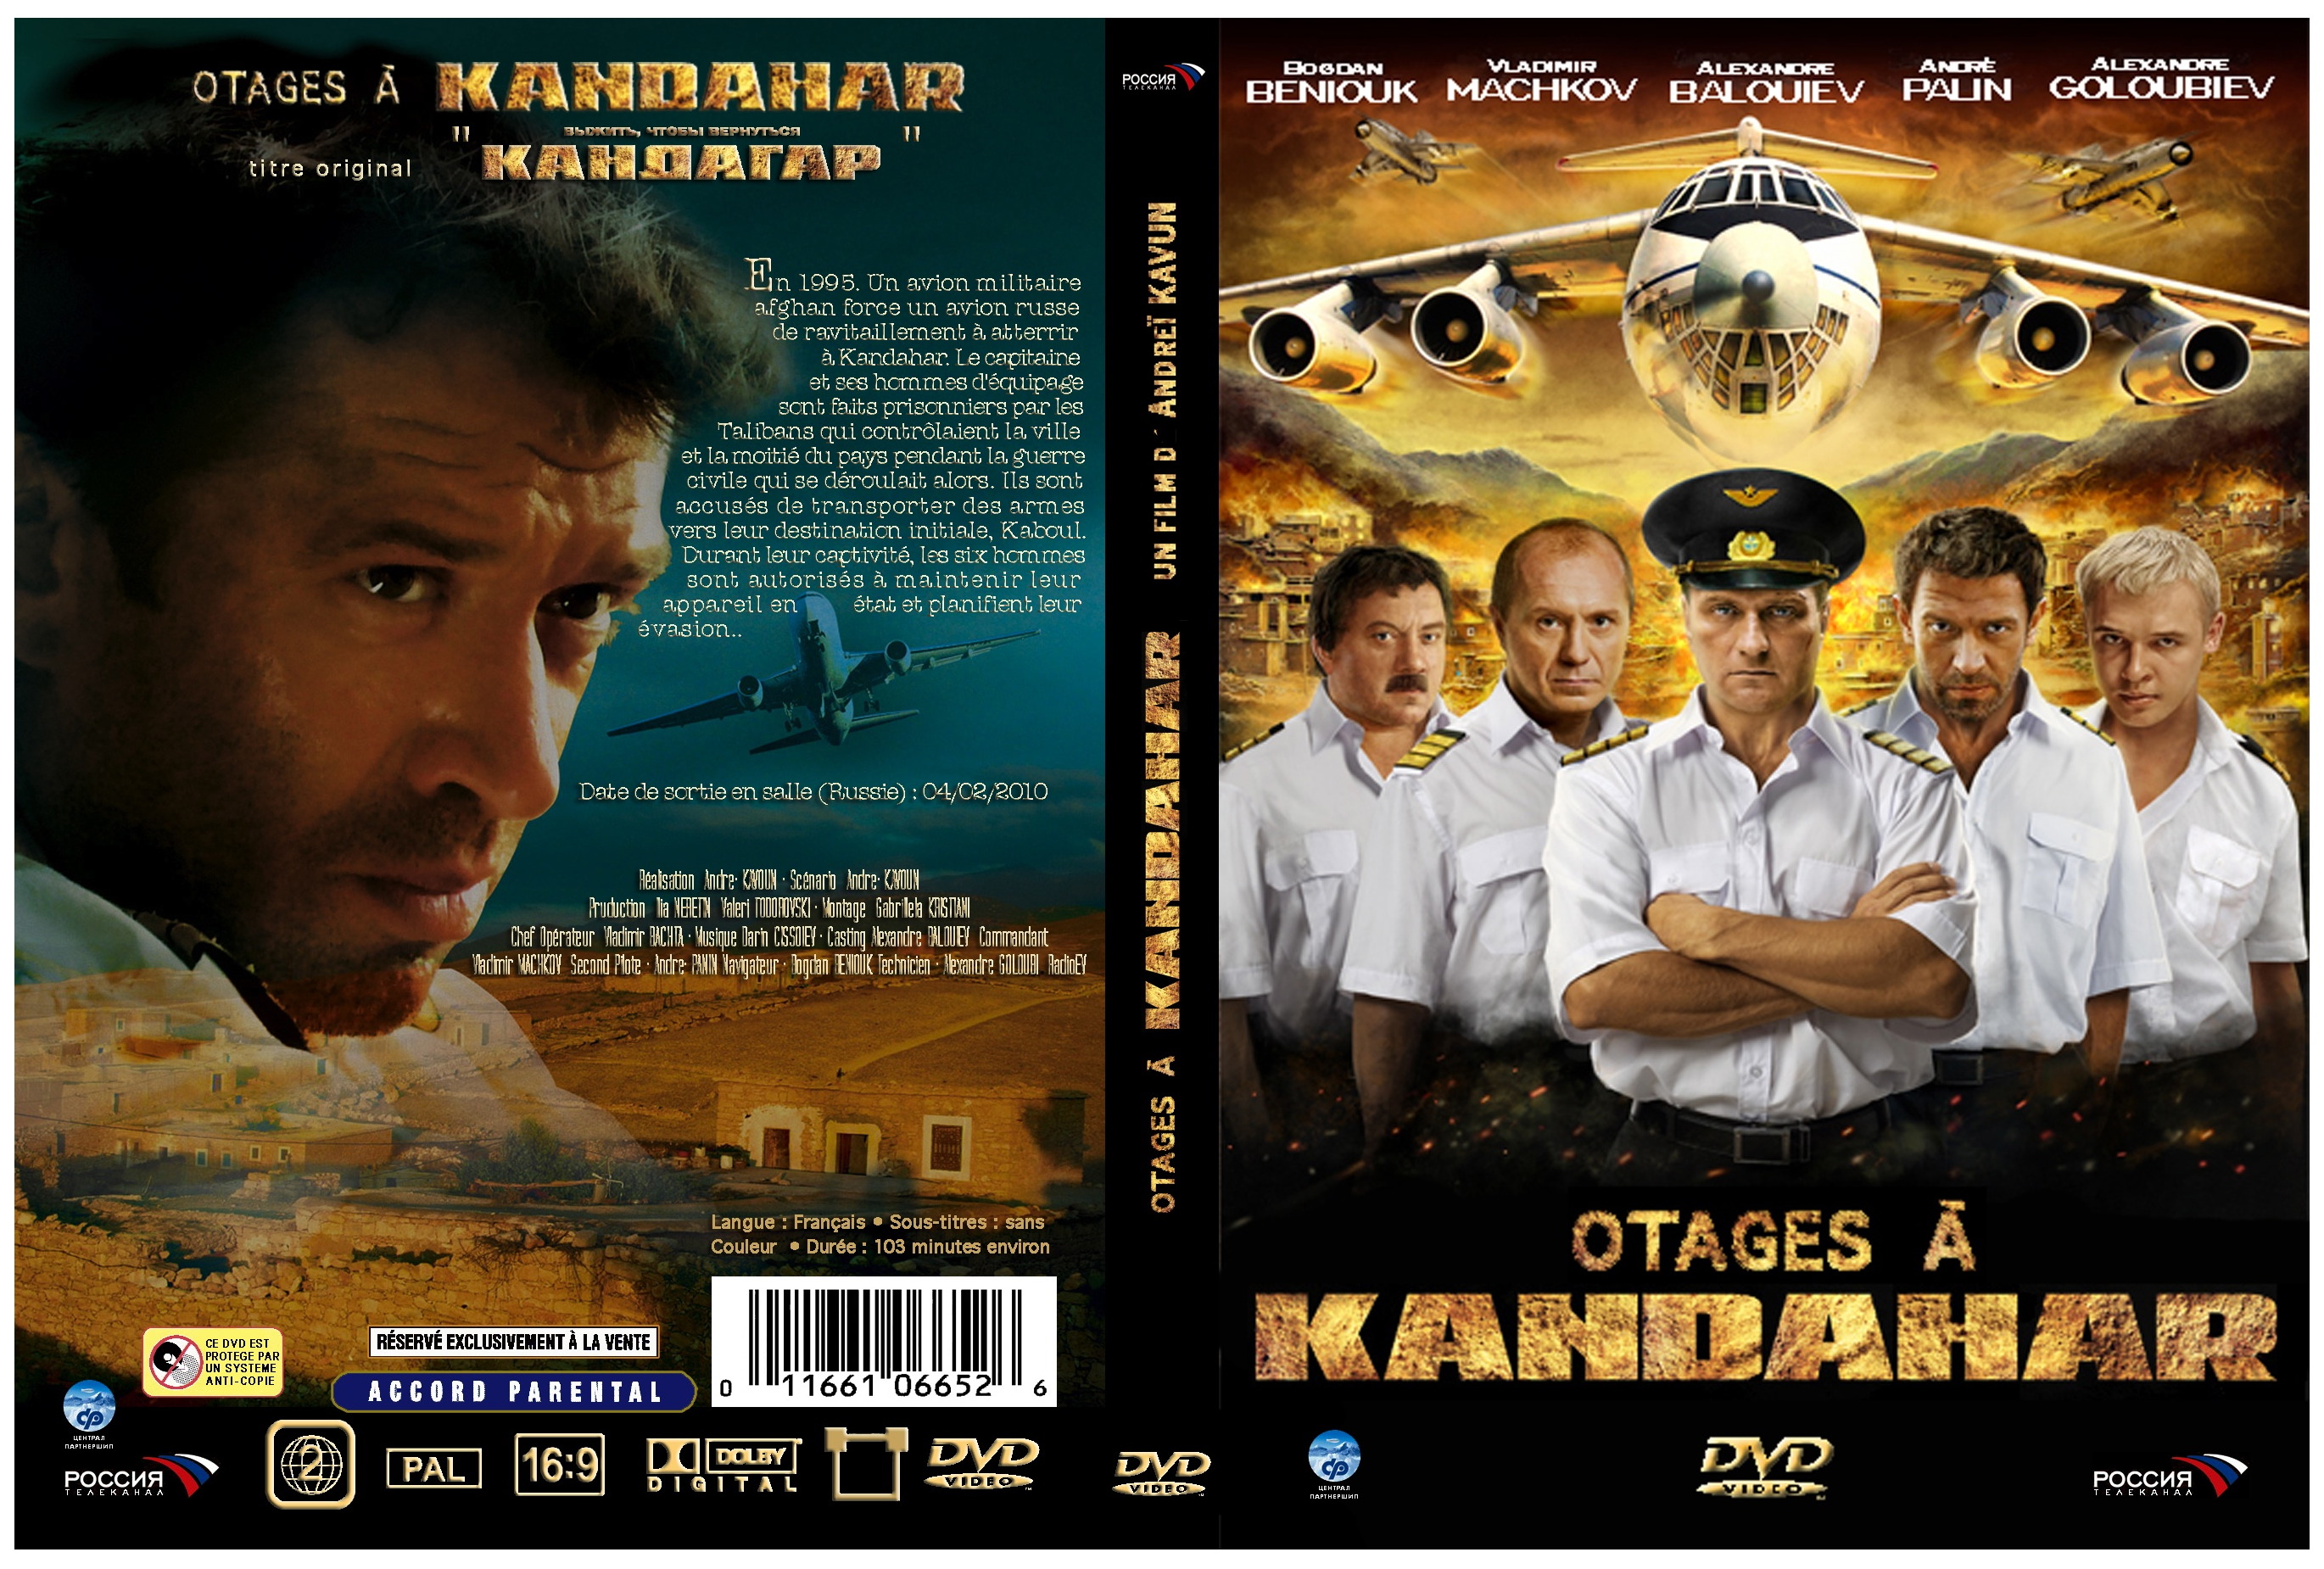 Jaquette DVD Otages a Kandahar custom